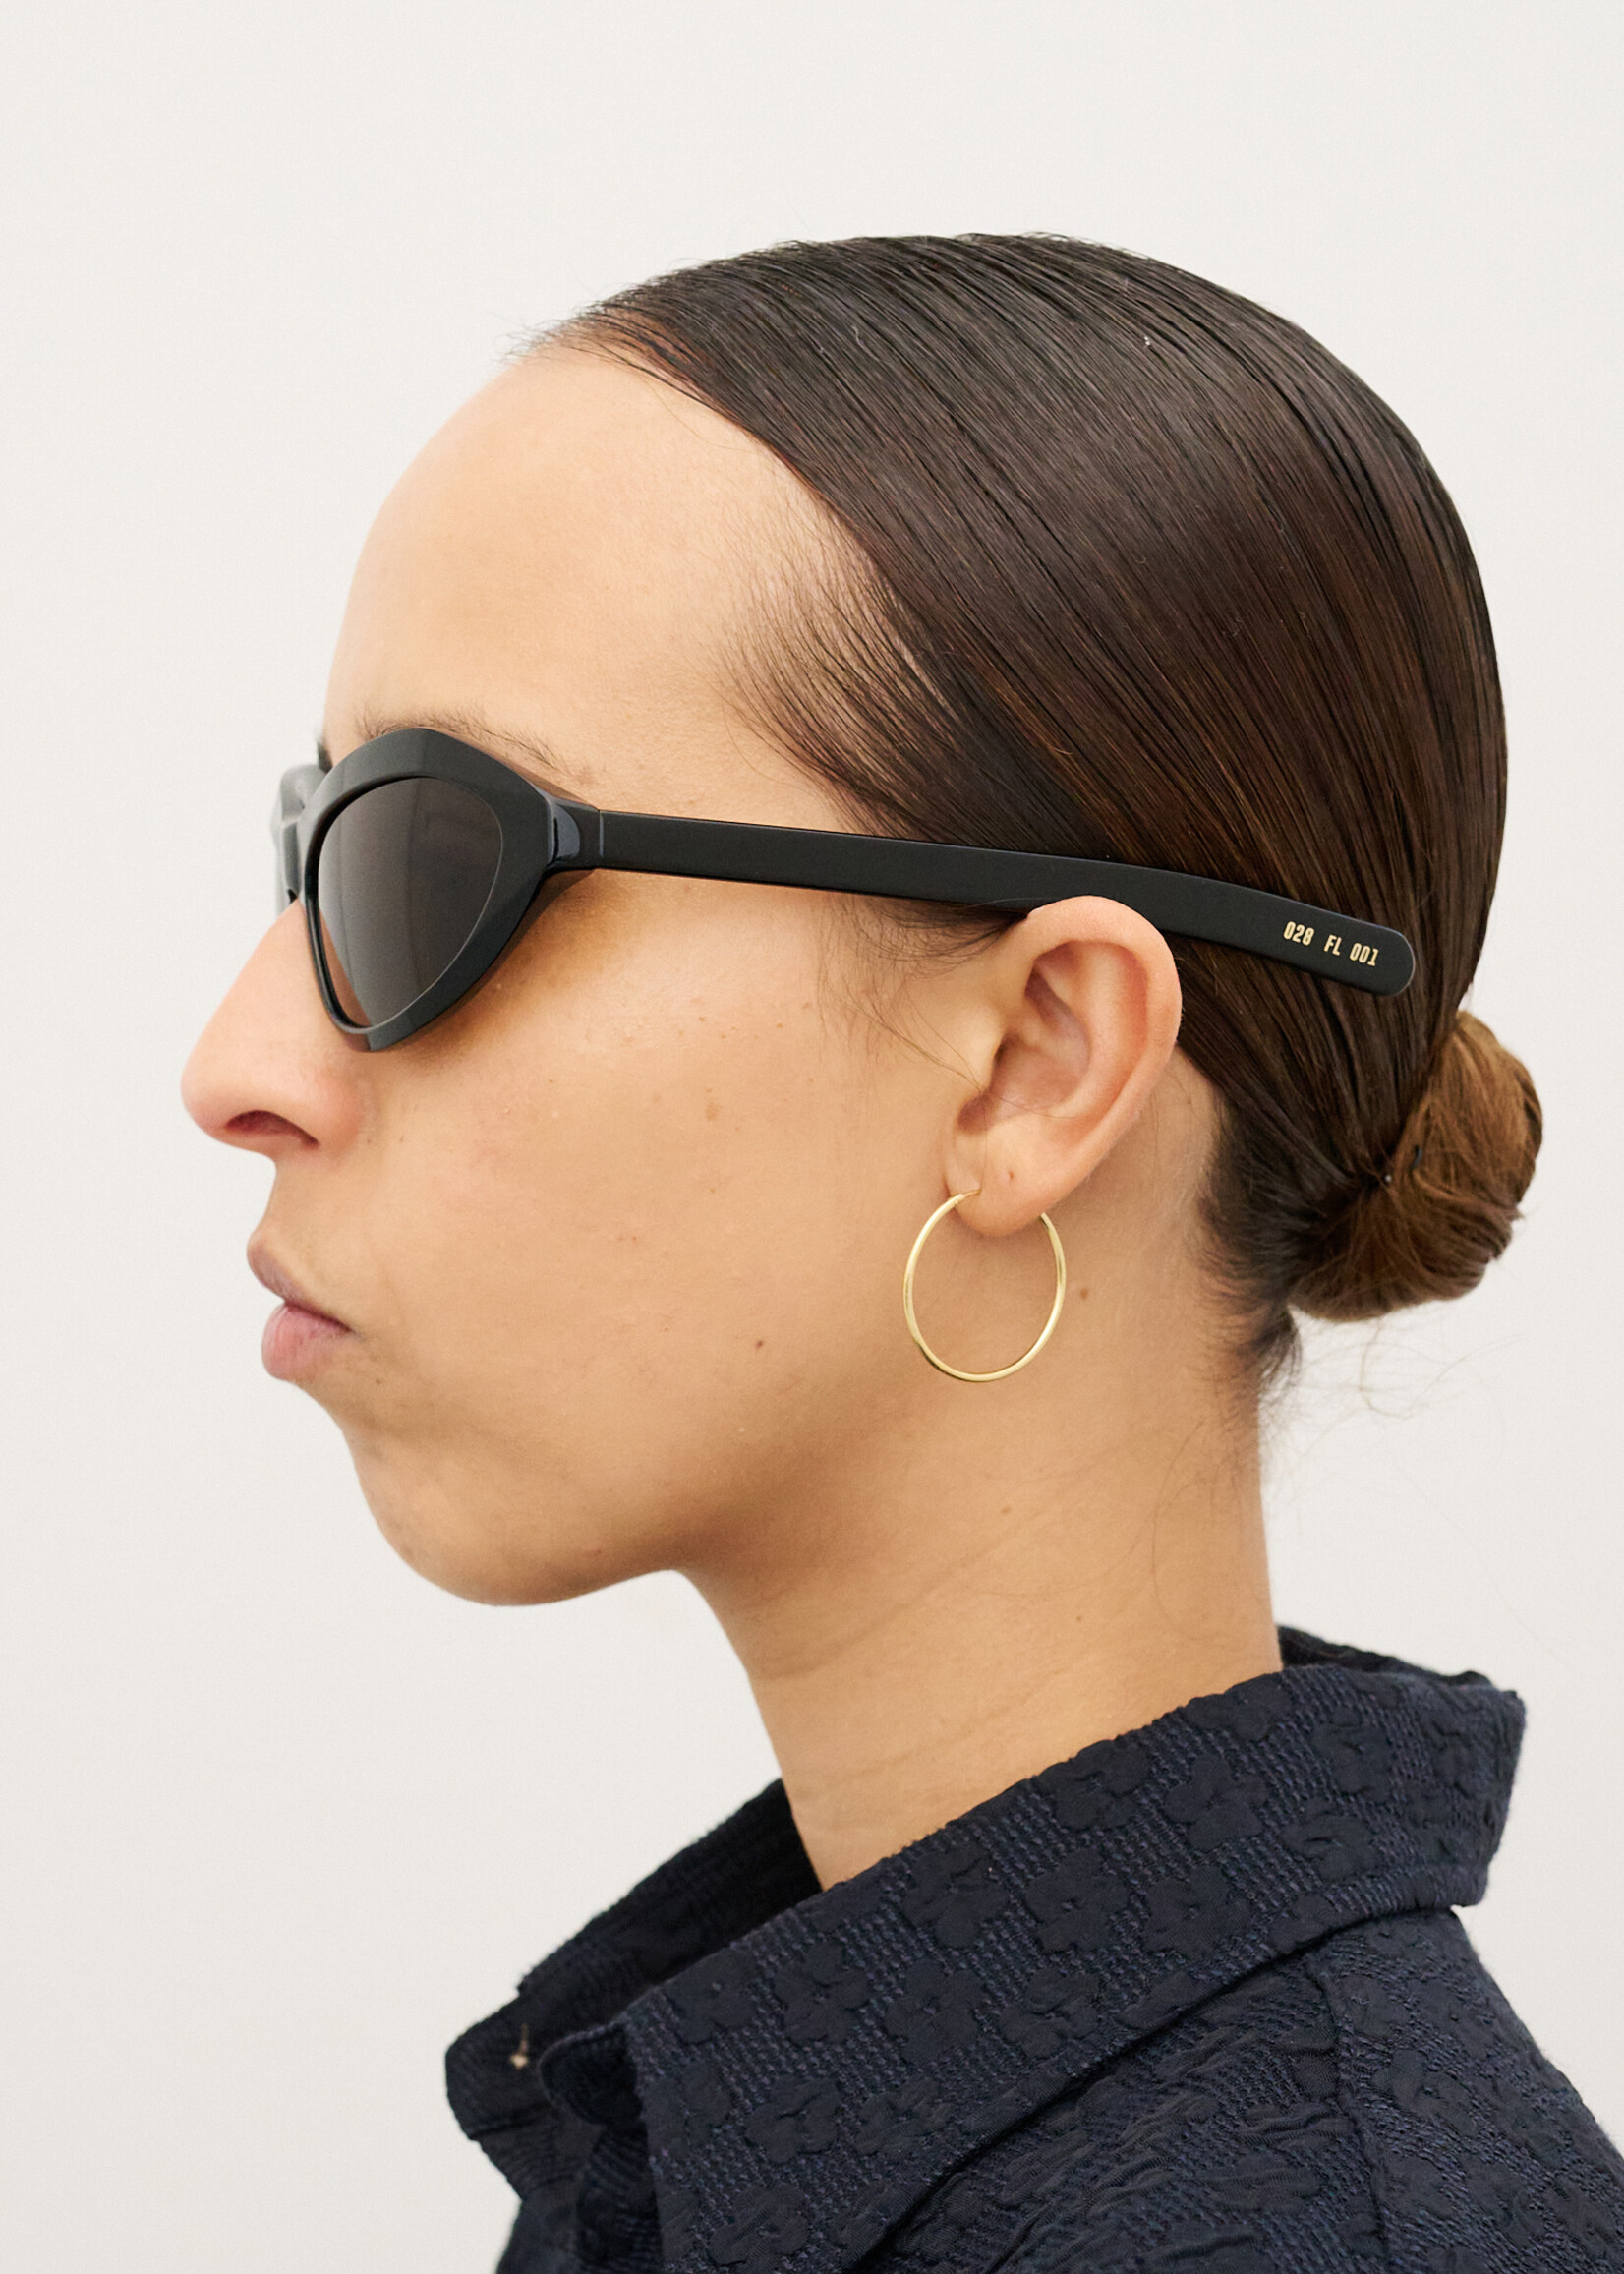 FLATLIST AKIWA Sunglasses in Solid Black with Solid Black Lens